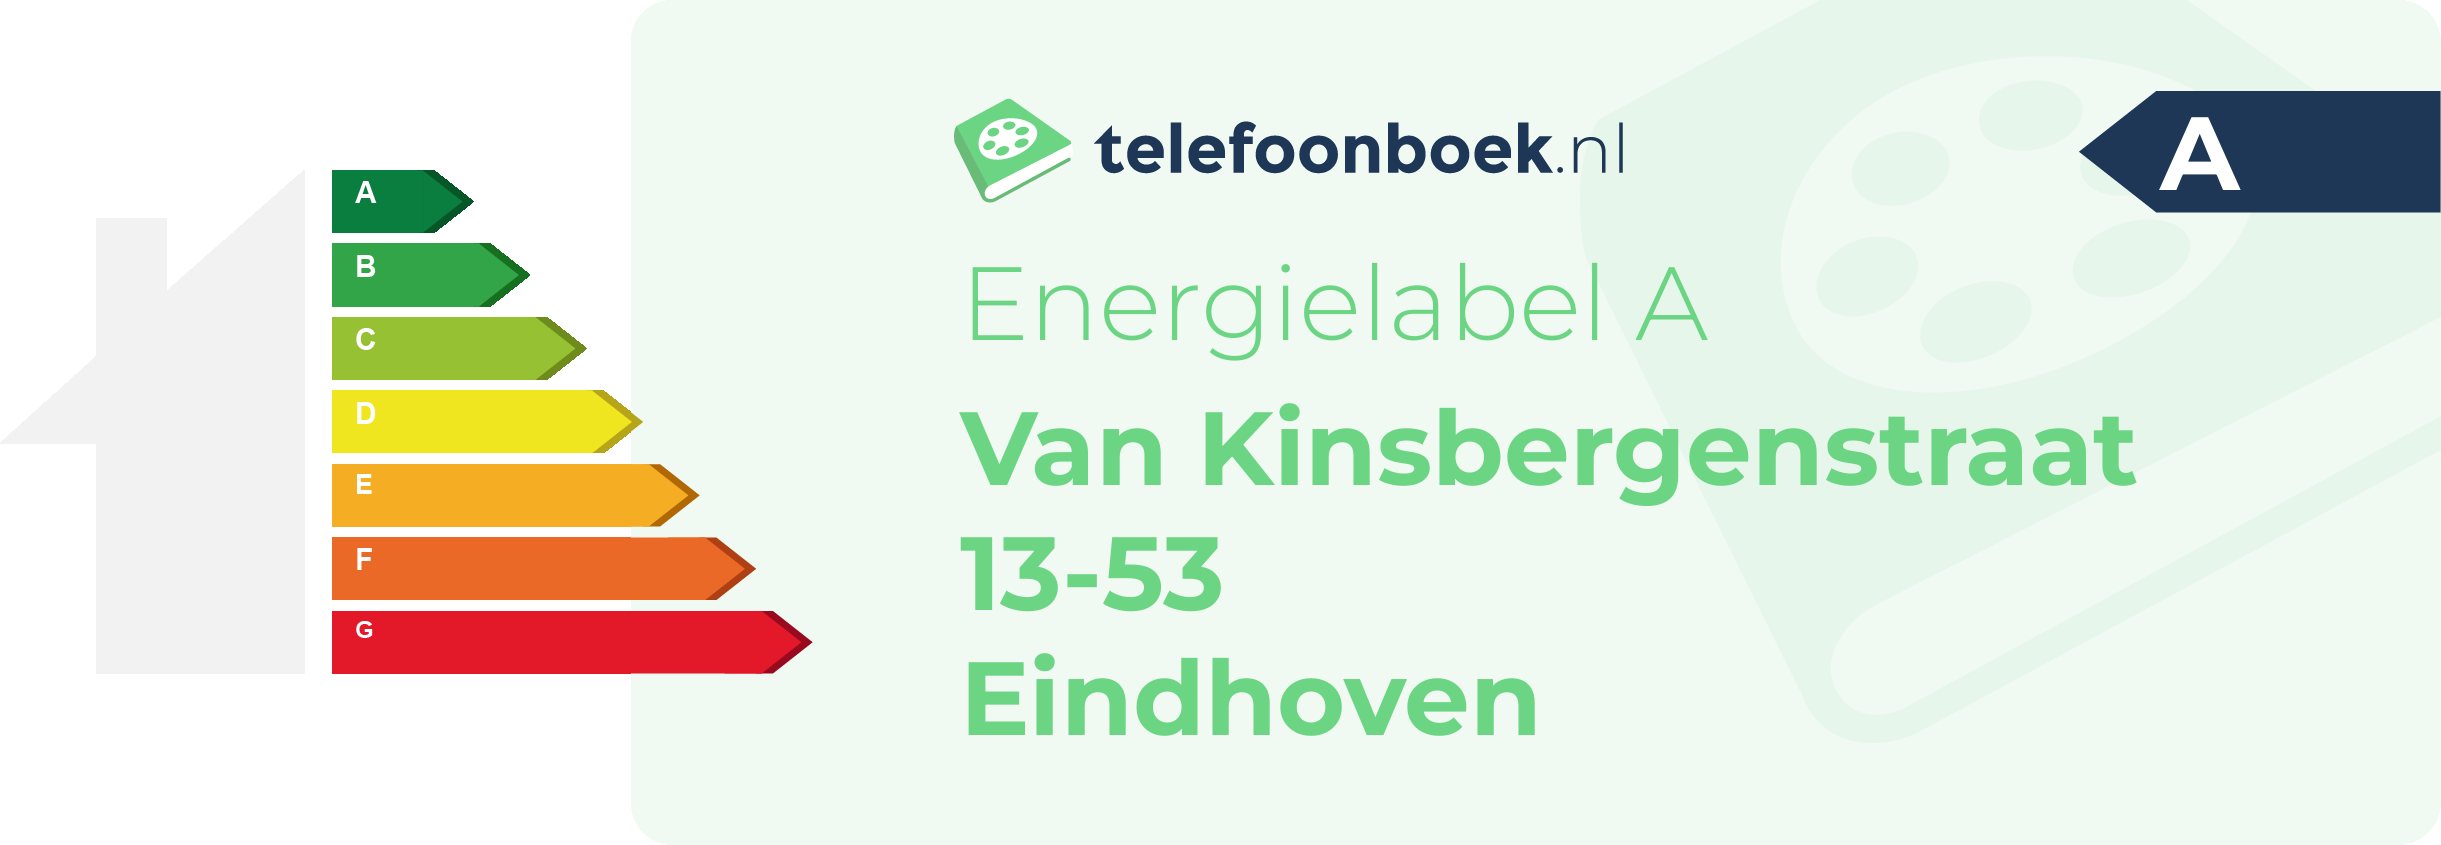 Energielabel Van Kinsbergenstraat 13-53 Eindhoven